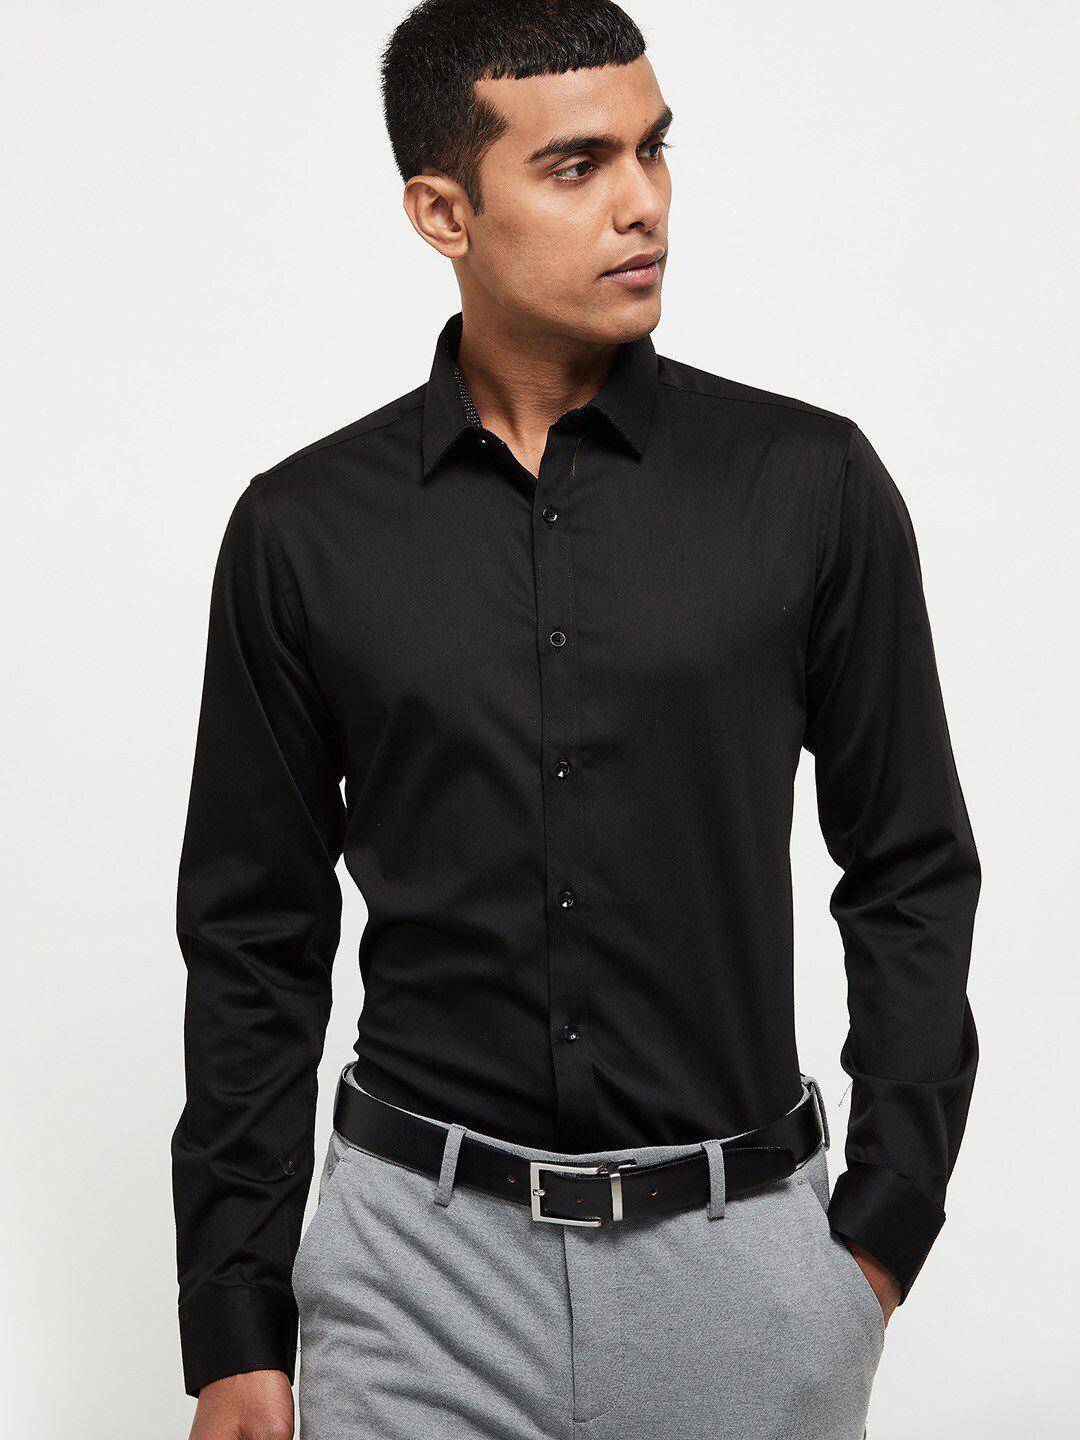 max men black casual shirt